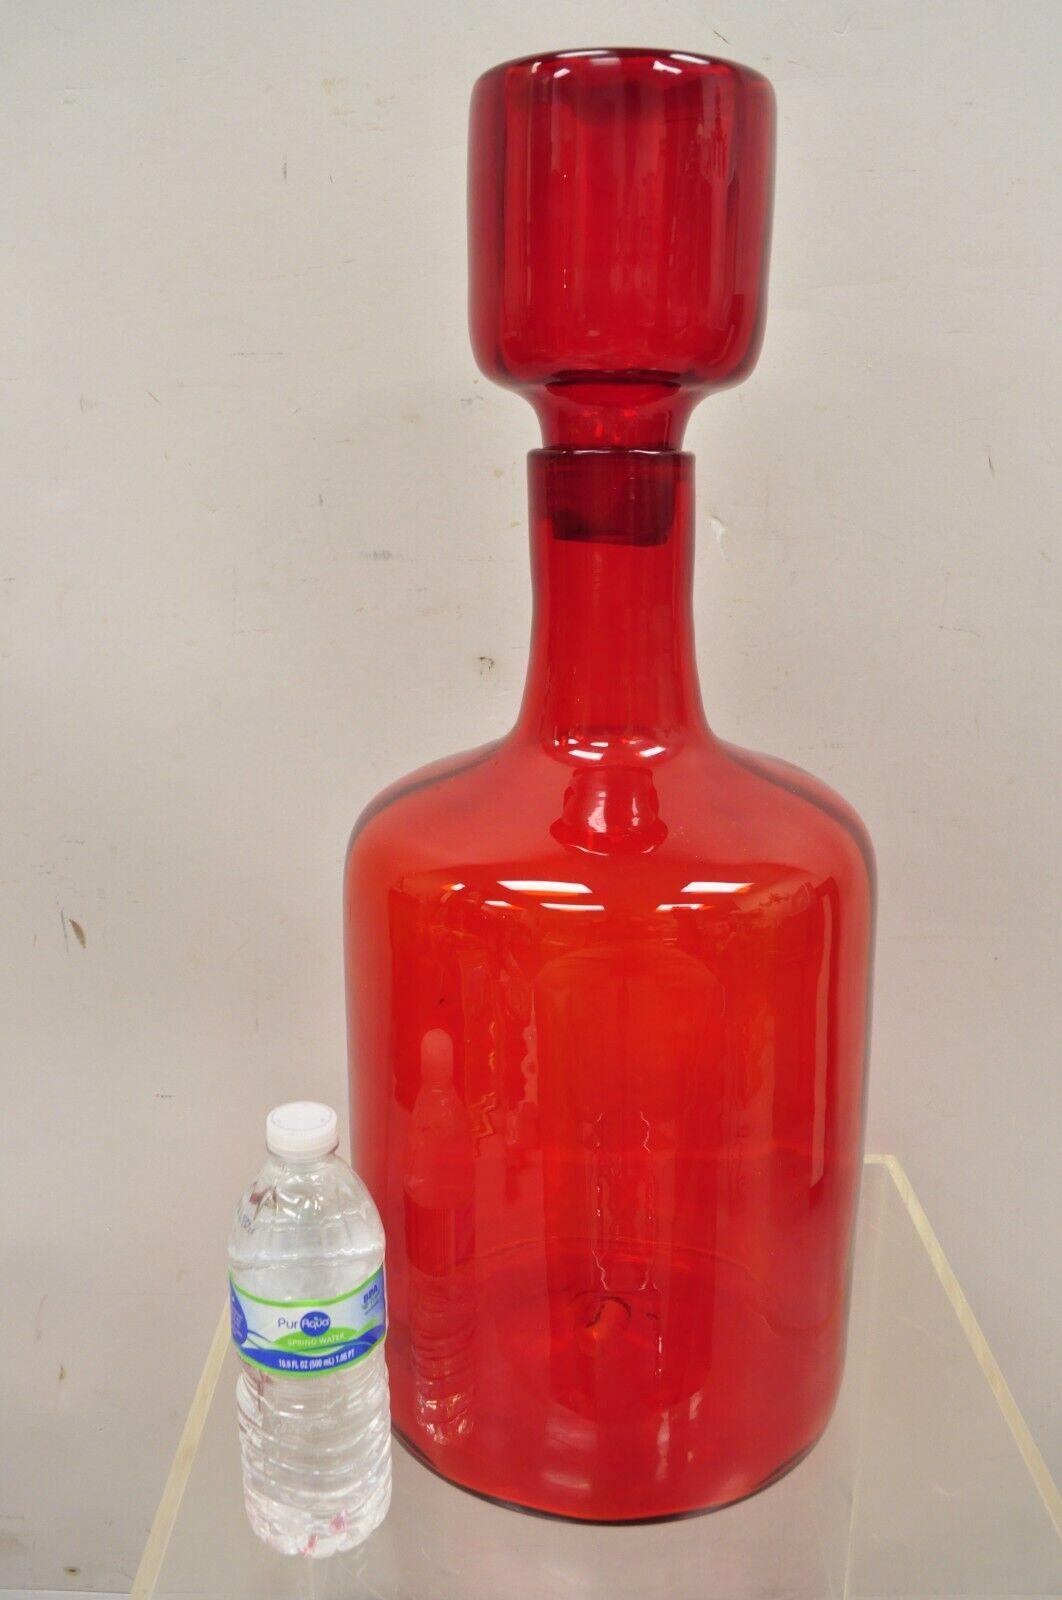 Large Blenko red blown Art Glass vase vessel jug with stopper. Circa 1960s.
Measurements: 23.5